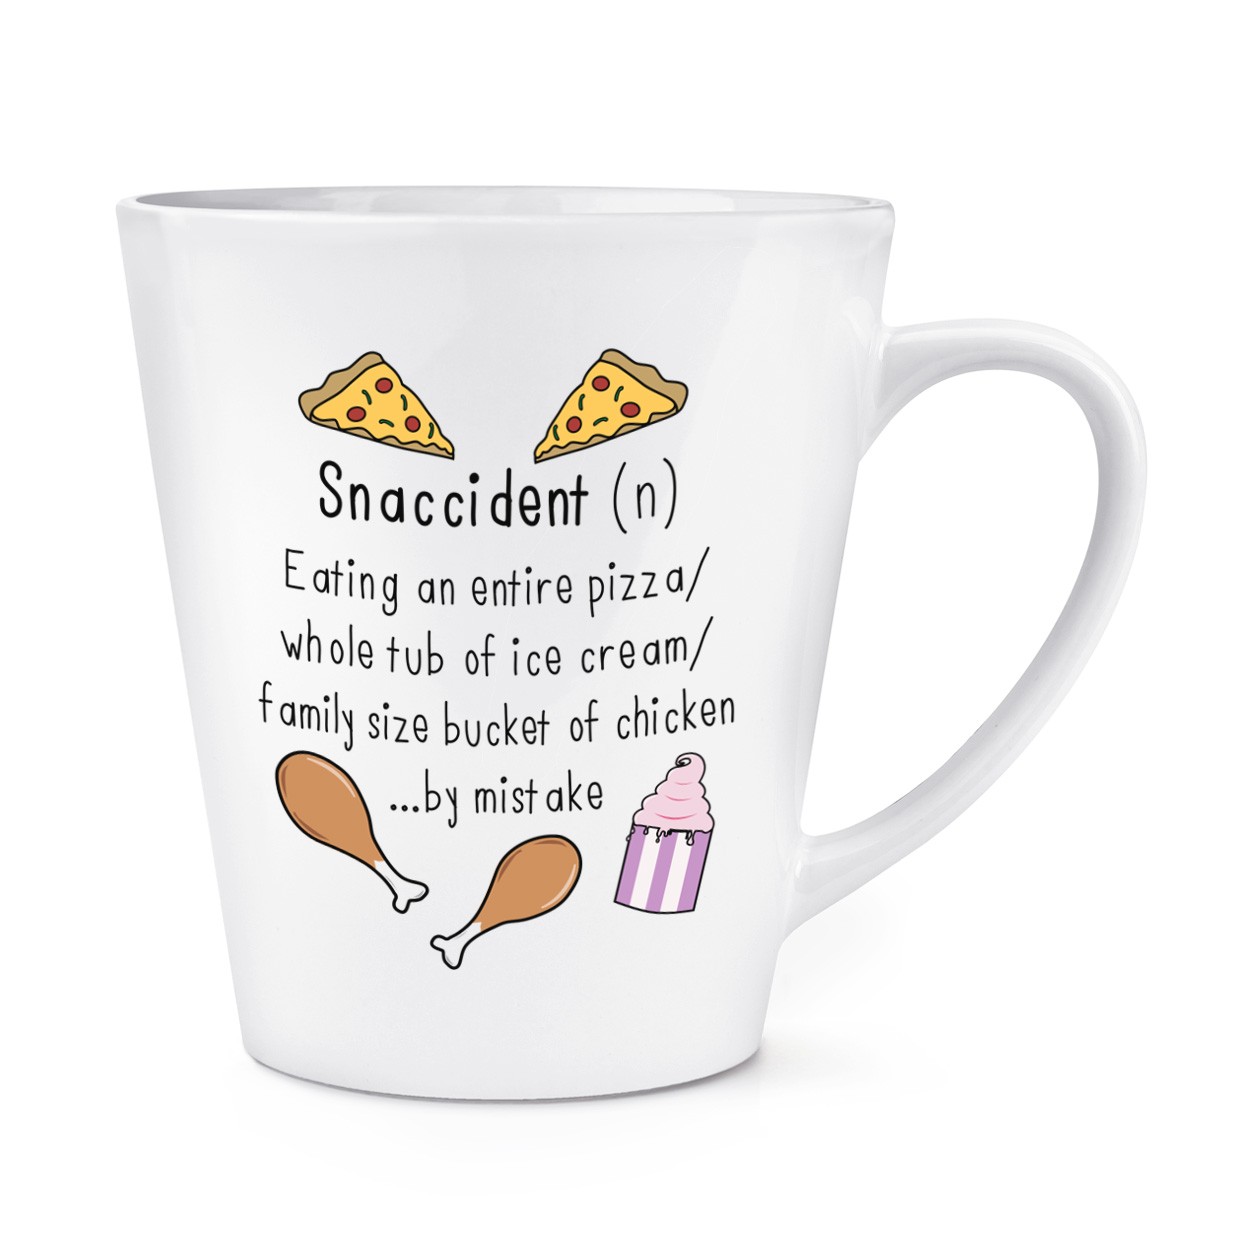 Snaccident Definition 12oz Latte Mug Cup